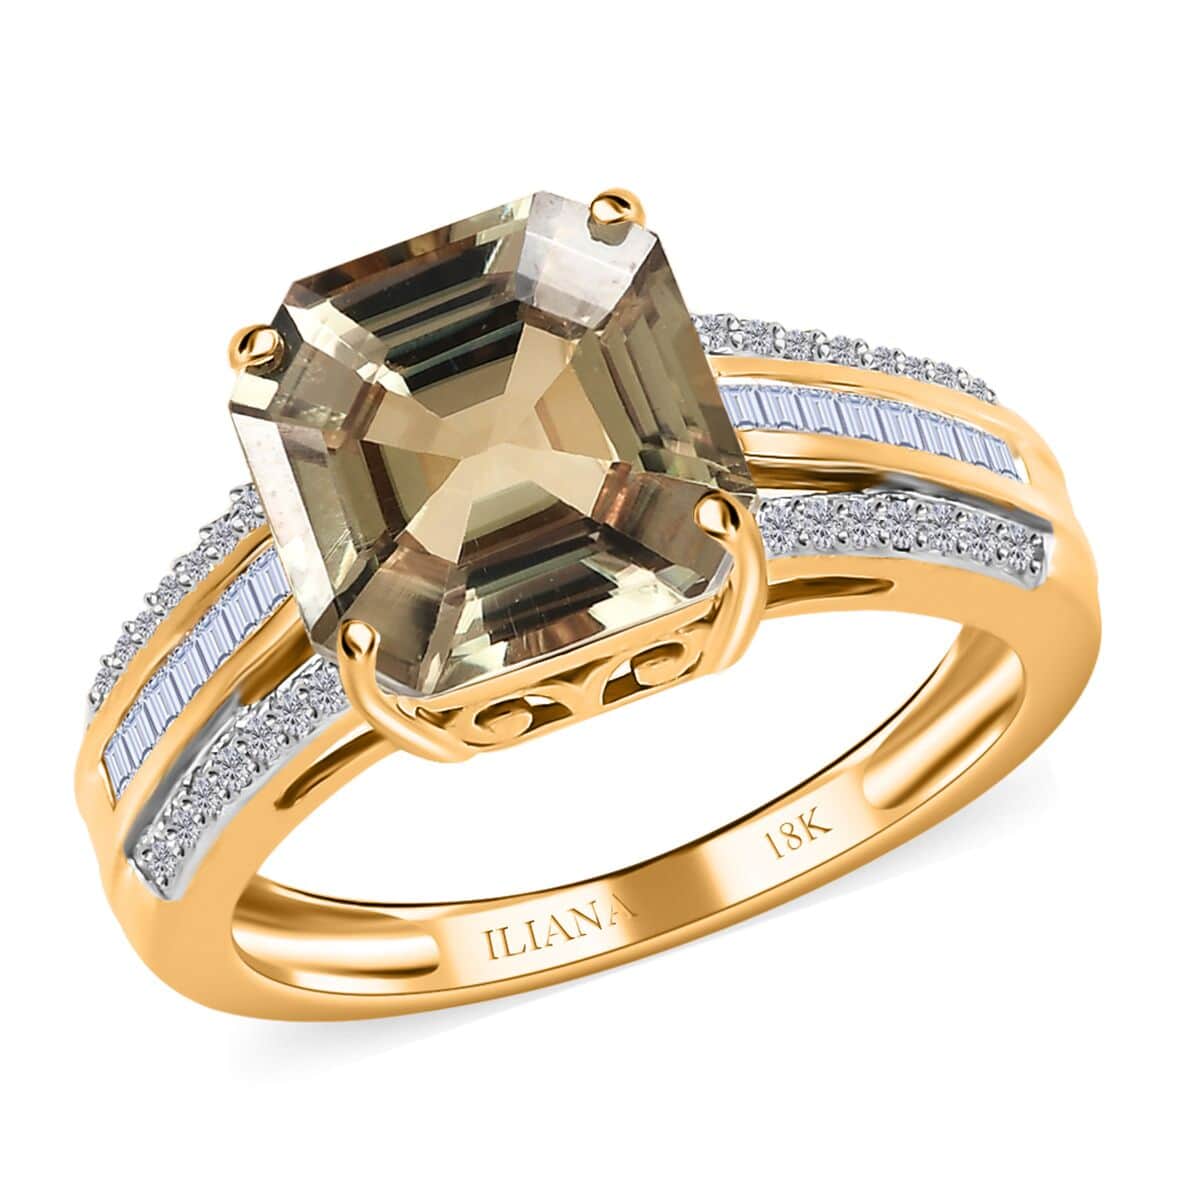 Iliana 18K Yellow Gold AAA Turkizite and G-H SI Diamond Ring 4.25 Grams 4.35 ctw image number 0